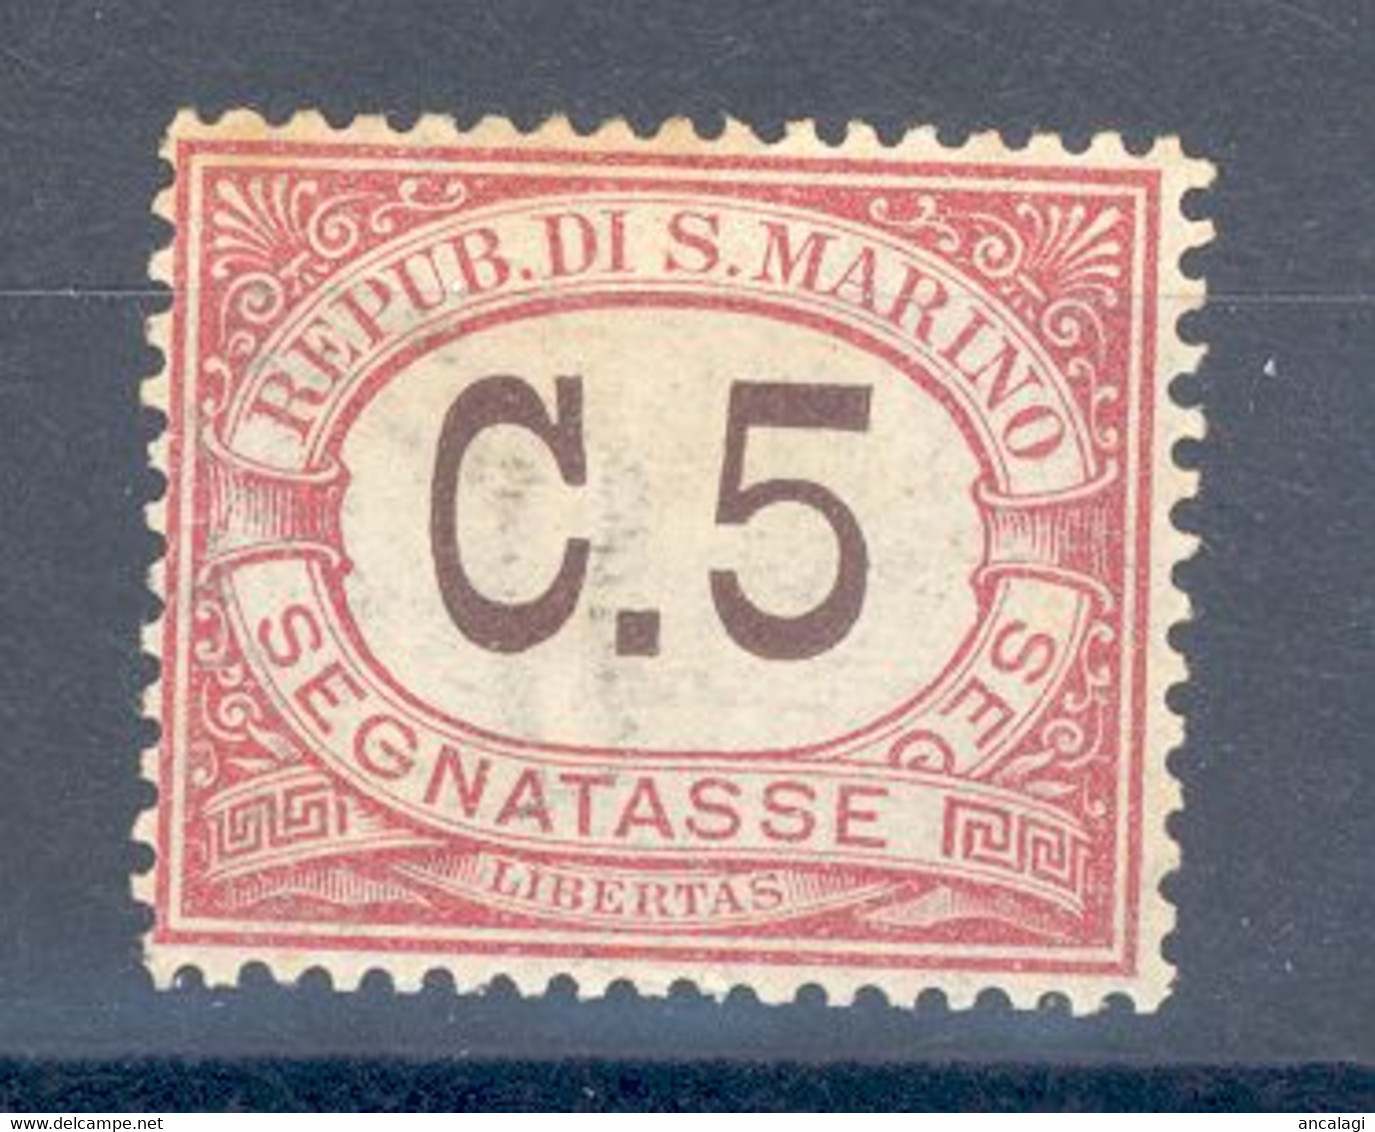 RSM F.lli Nuovi Segnatasse 006 - San Marino 1924 - 1v. C.5 - Strafport